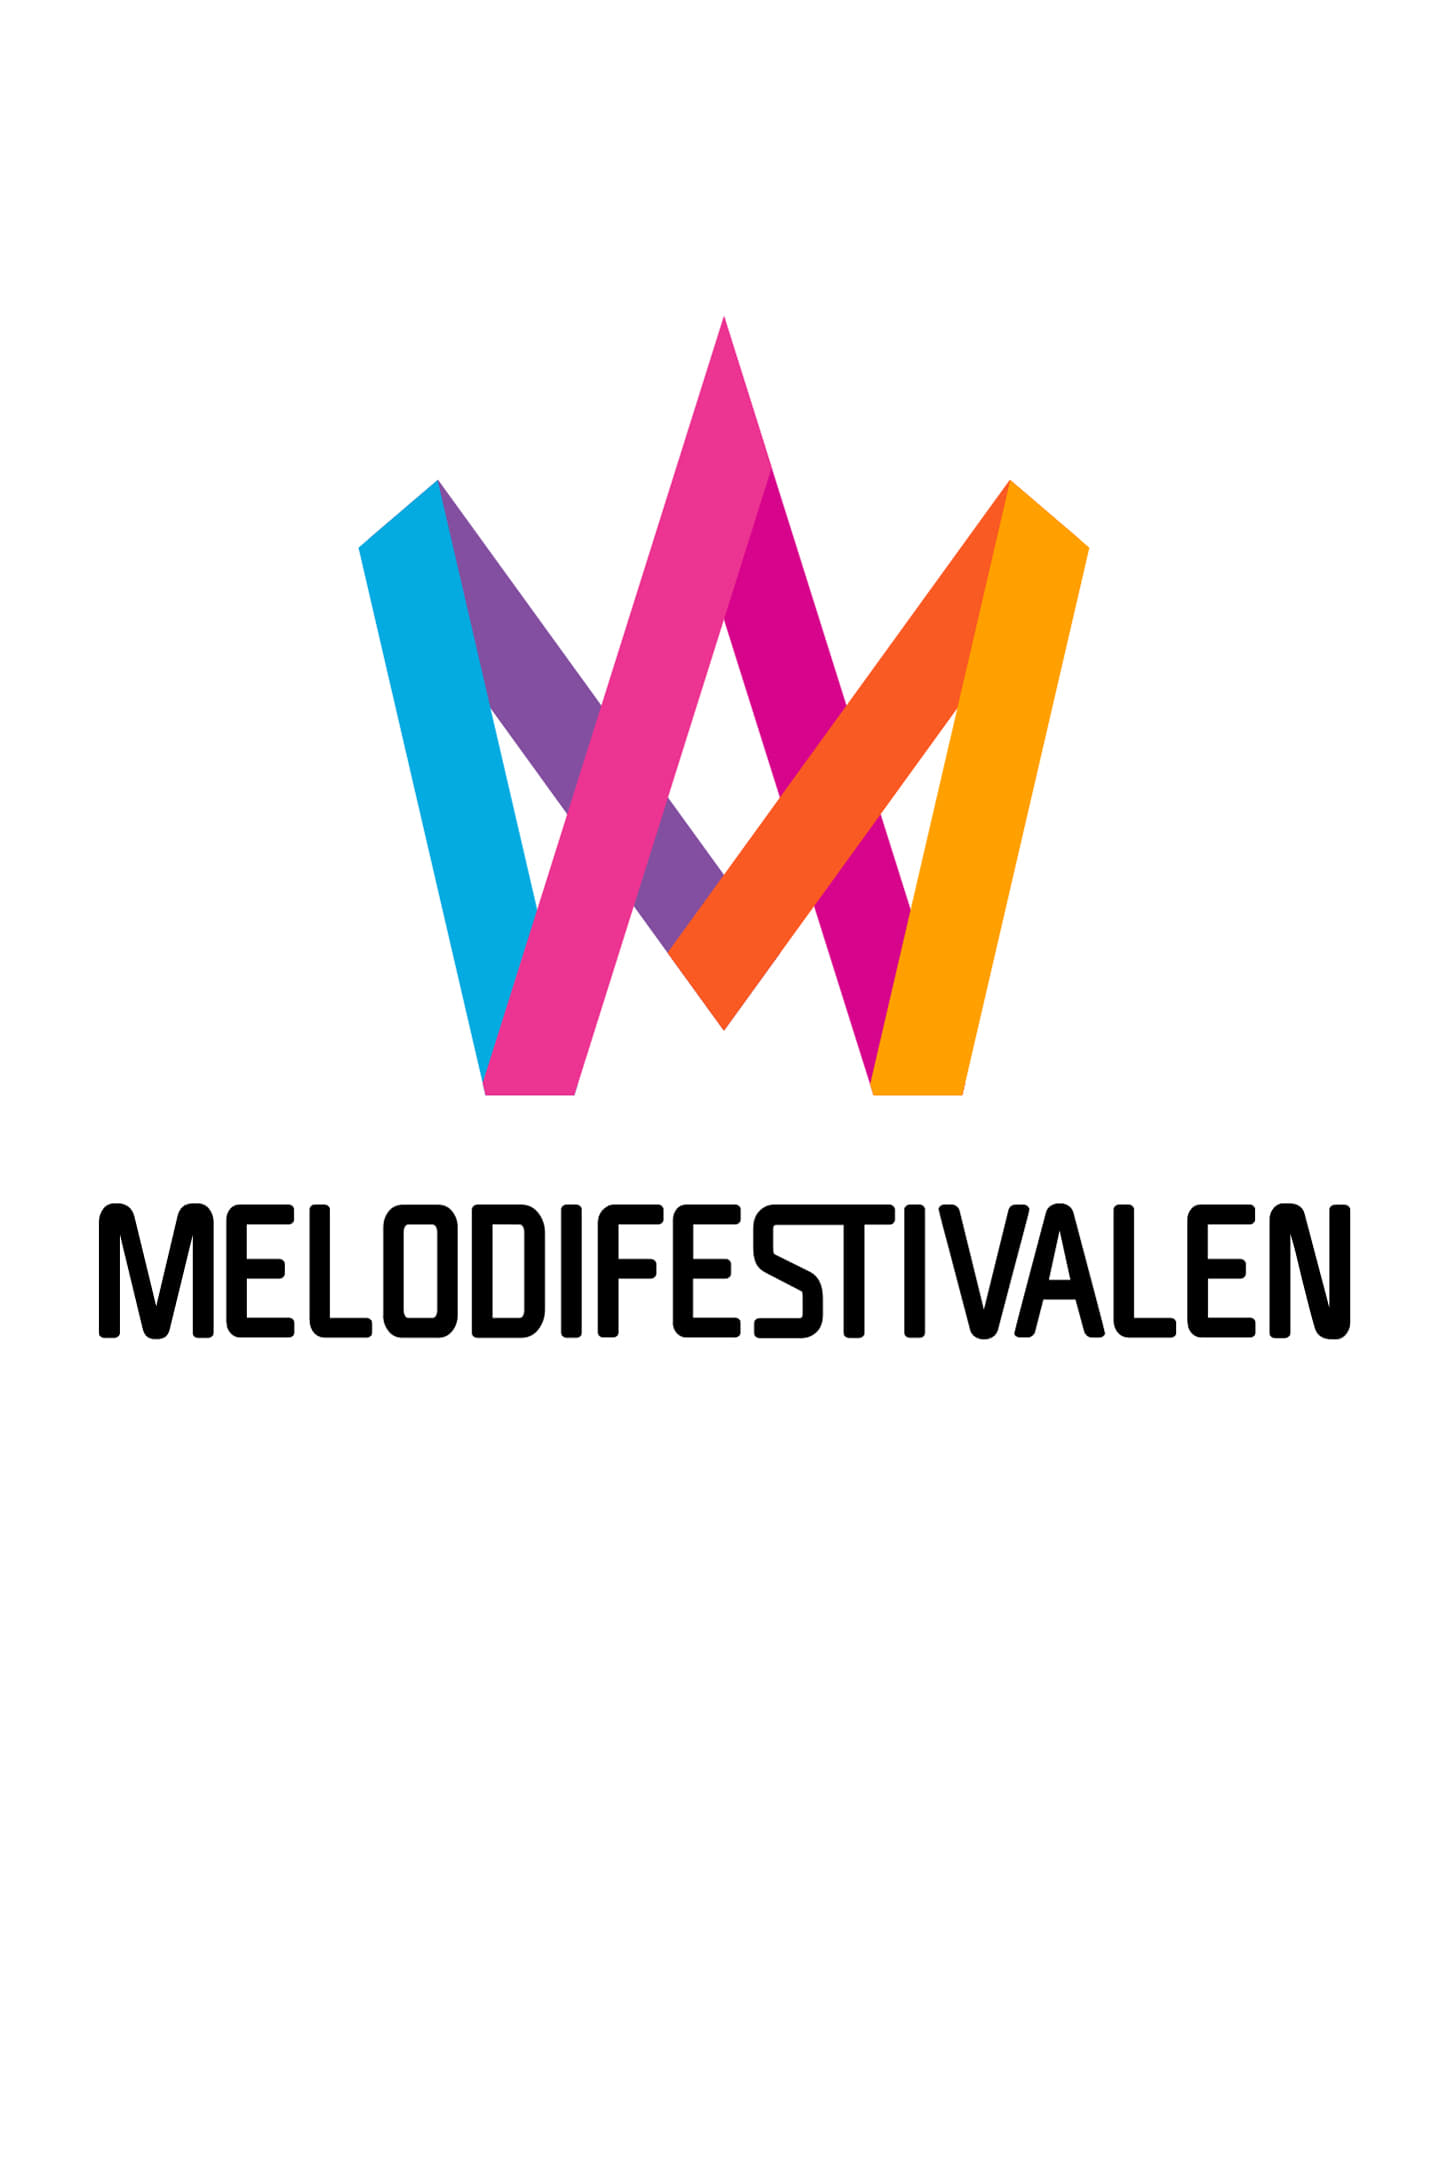 Melodifestivalen (1959)